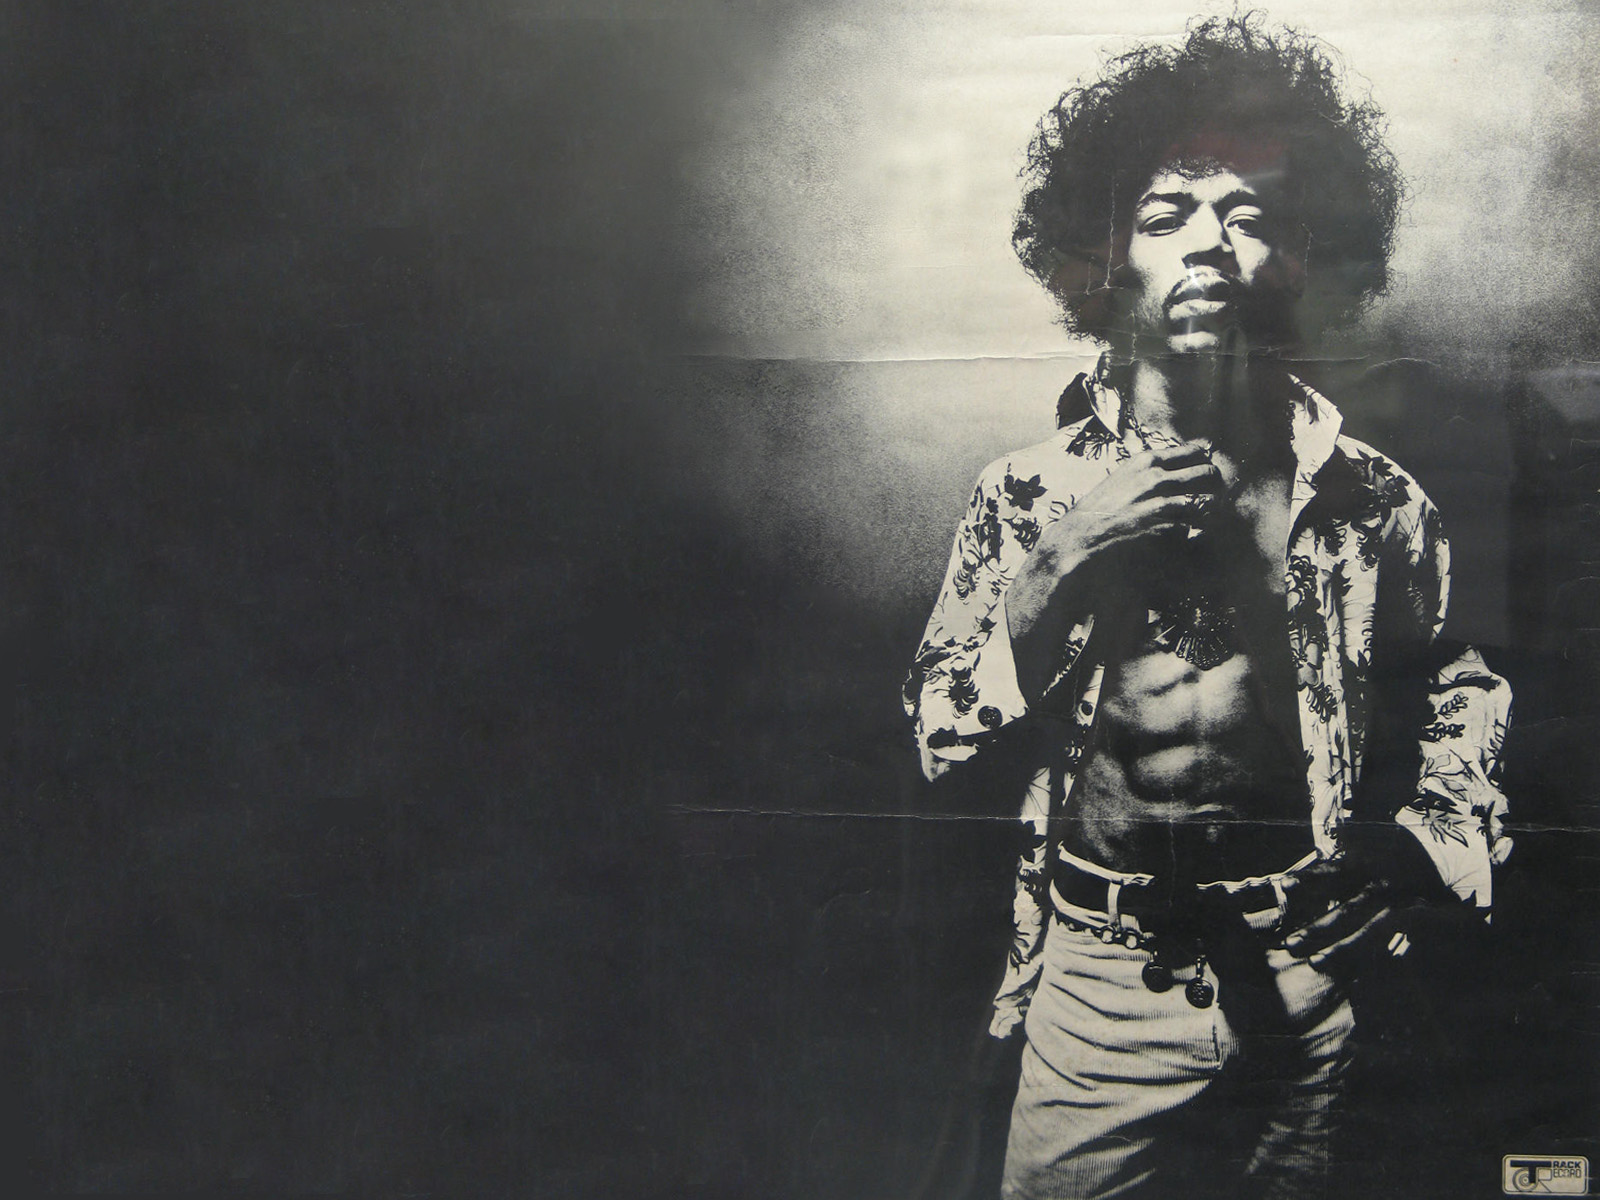 Jimi Hendrix Wallpaper High Resolution And Quality